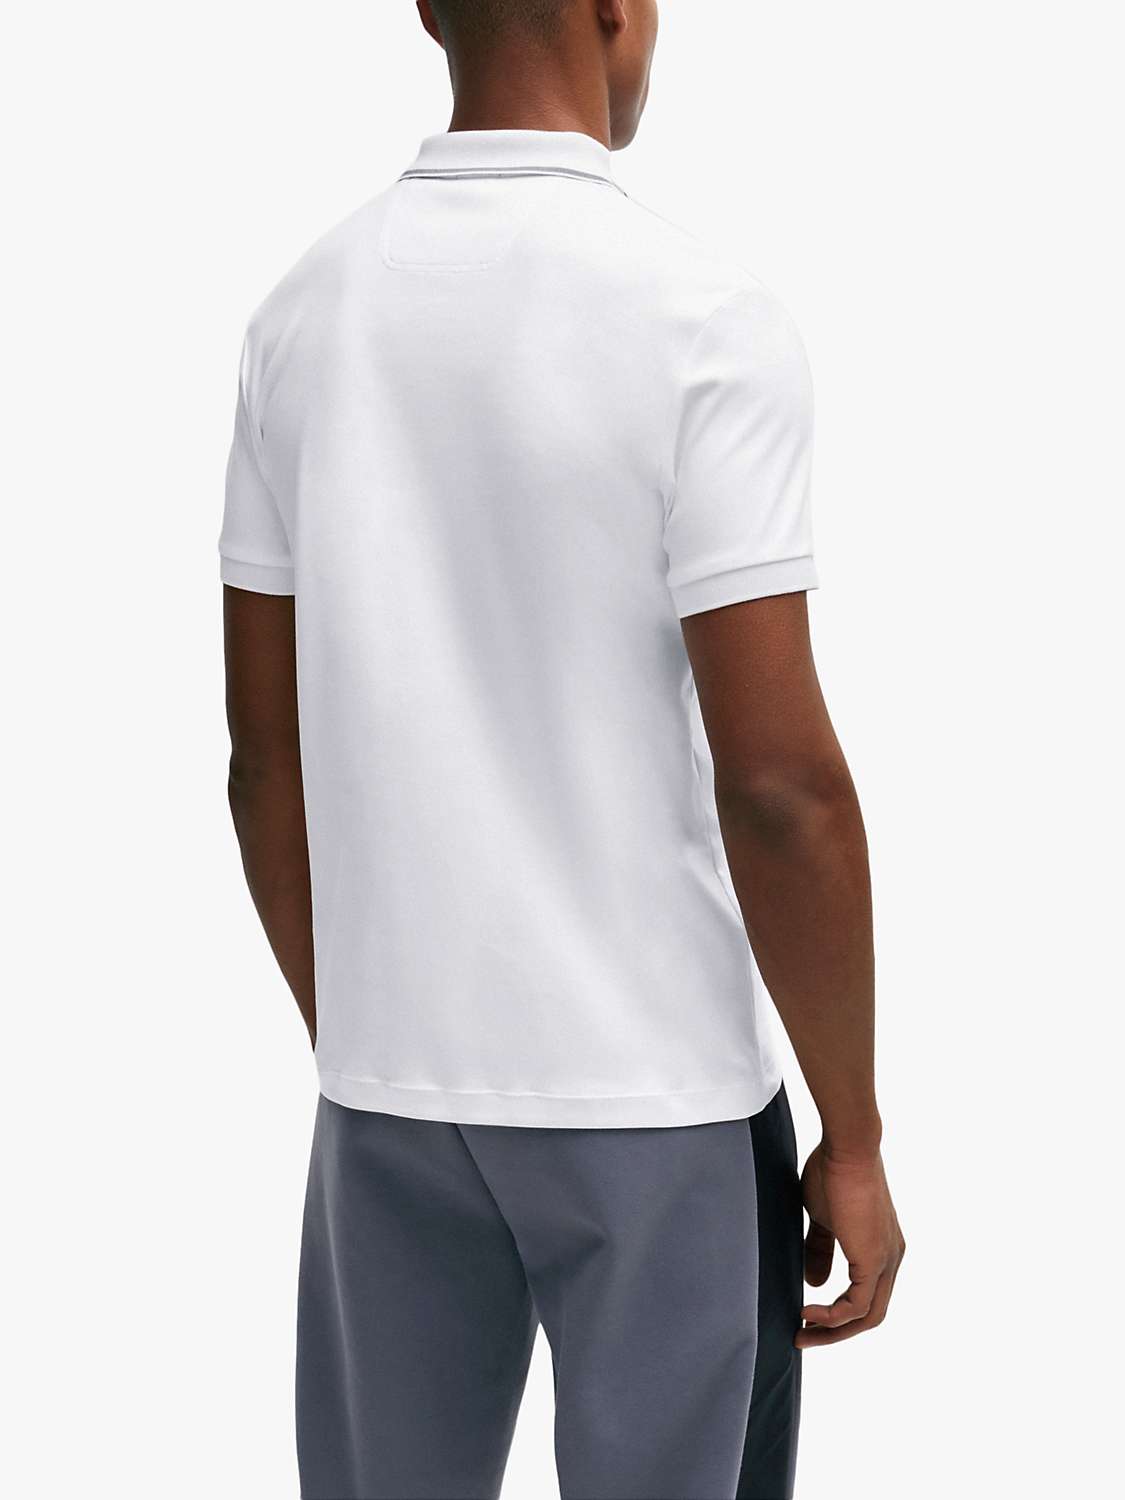 Buy BOSS Paule 100 Polo Shirt, White Online at johnlewis.com